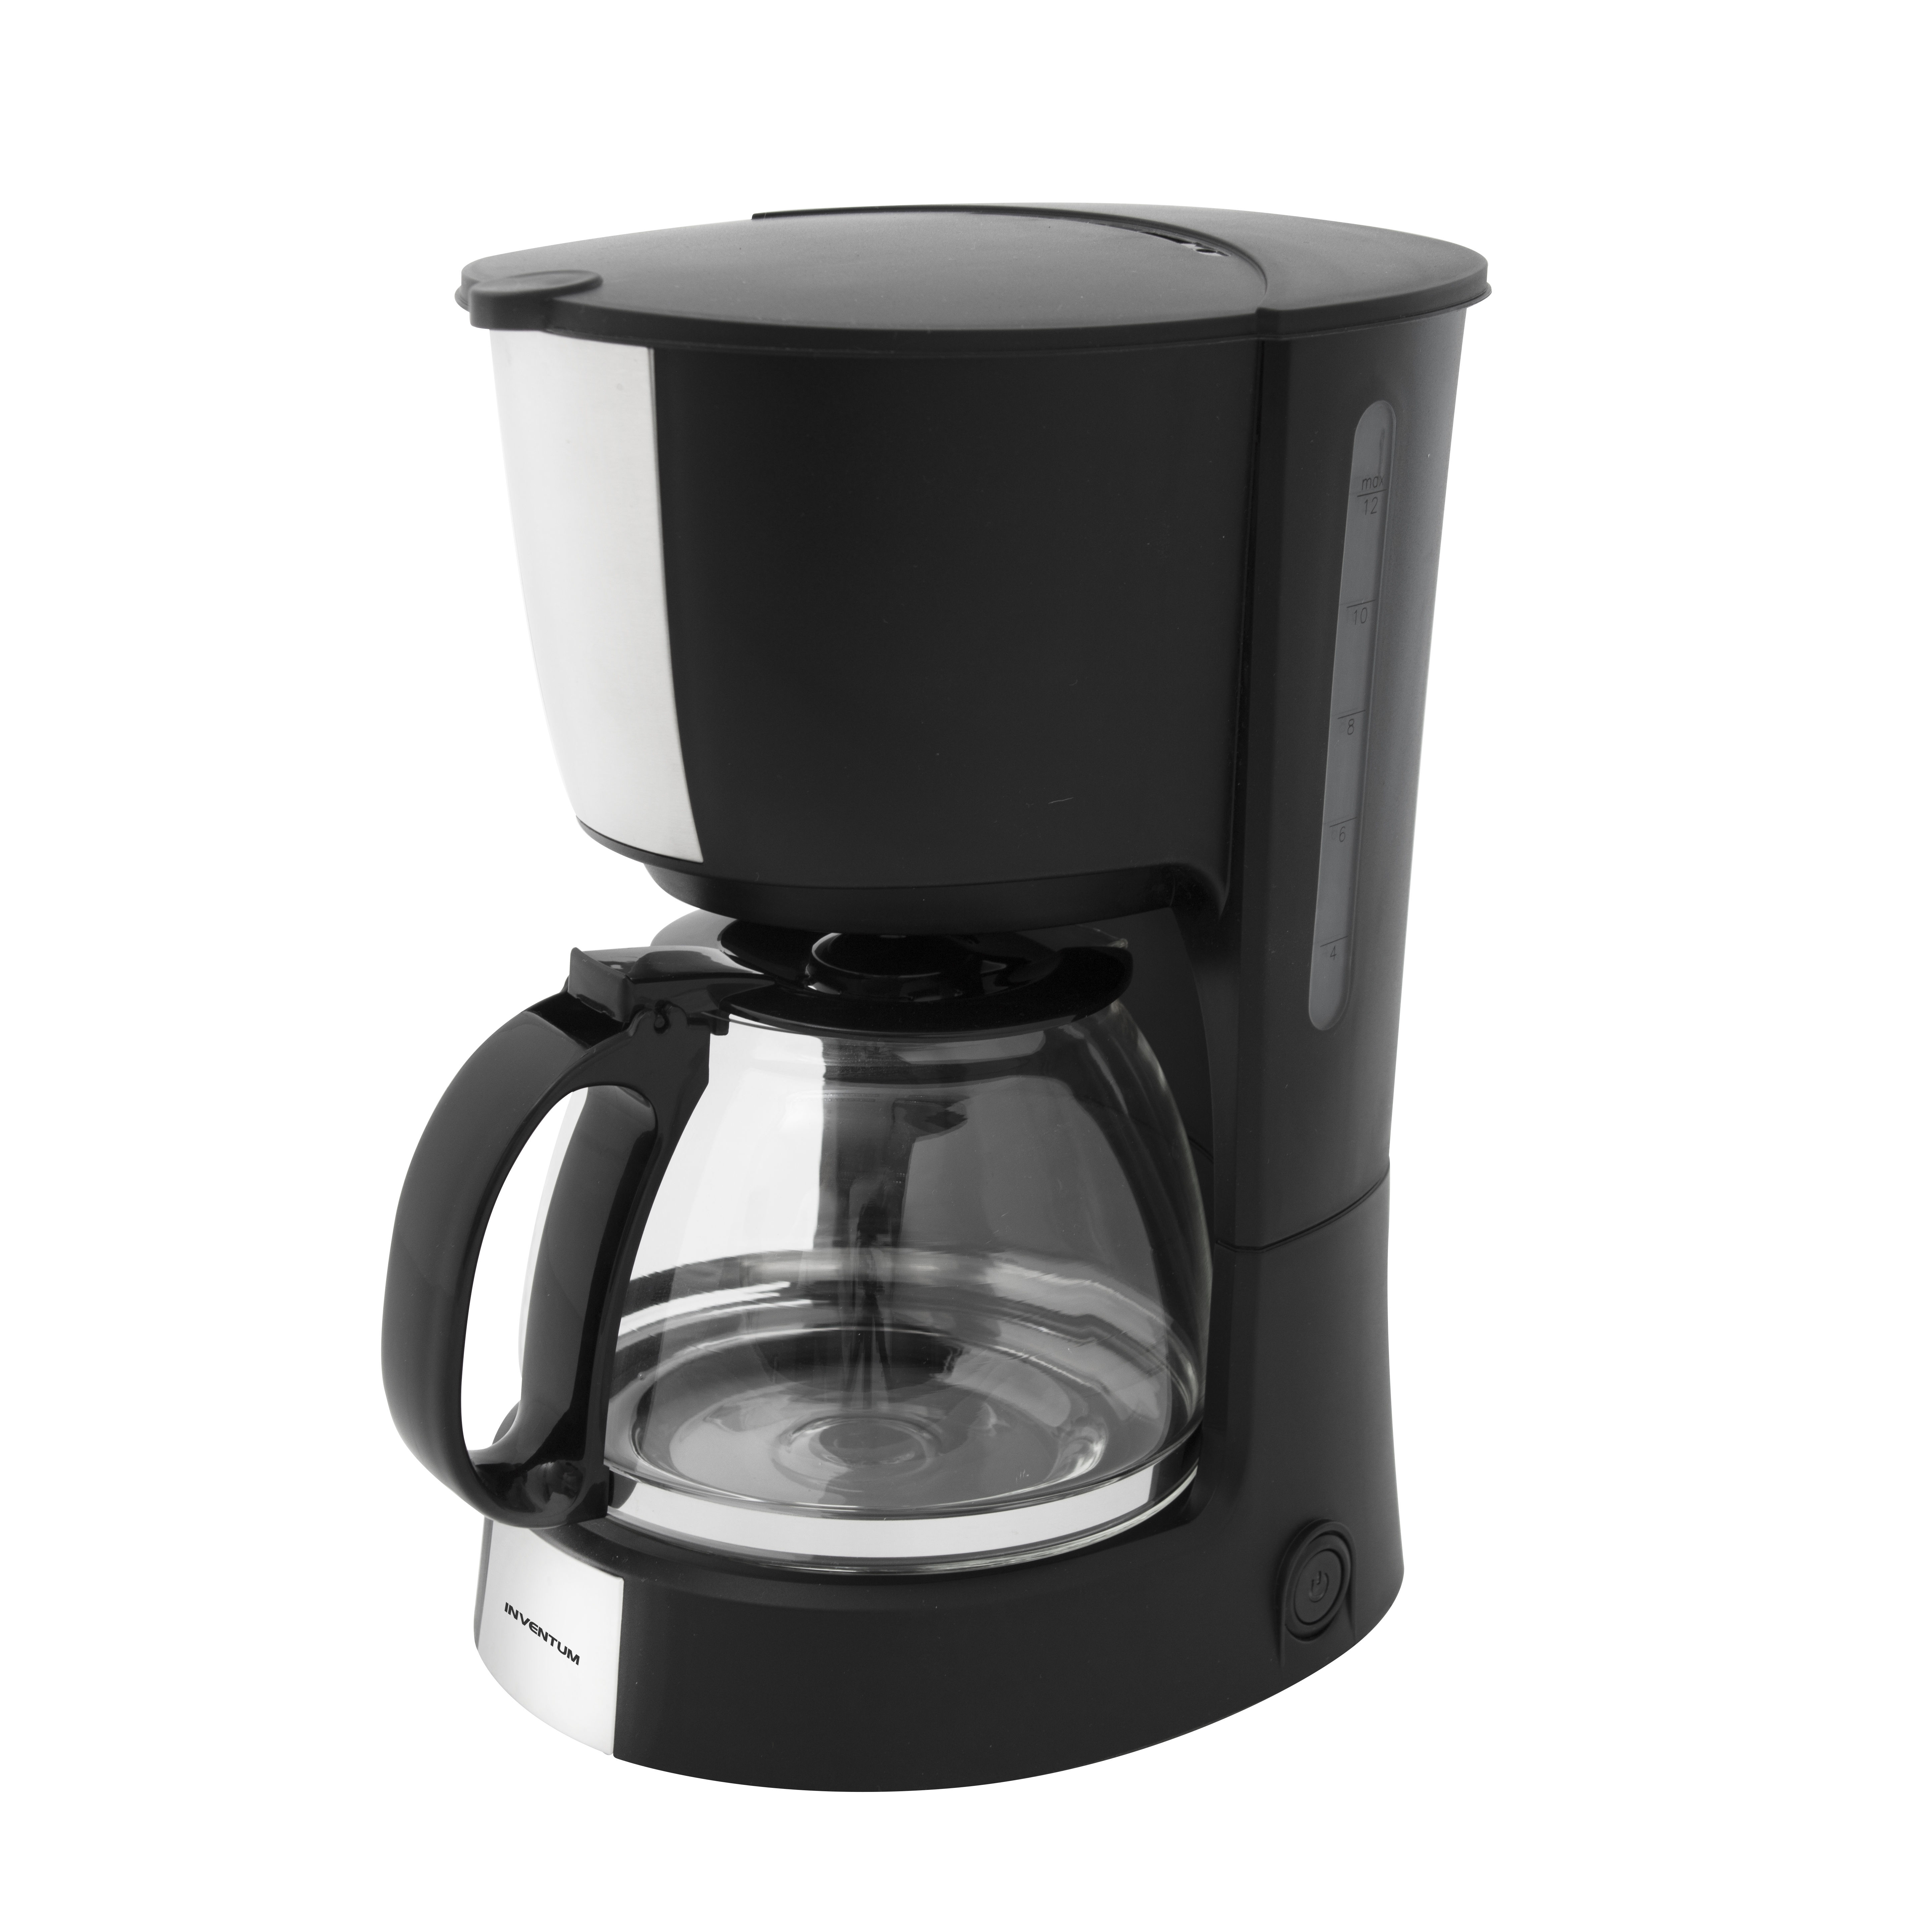 Inventum KZ610 coffee maker